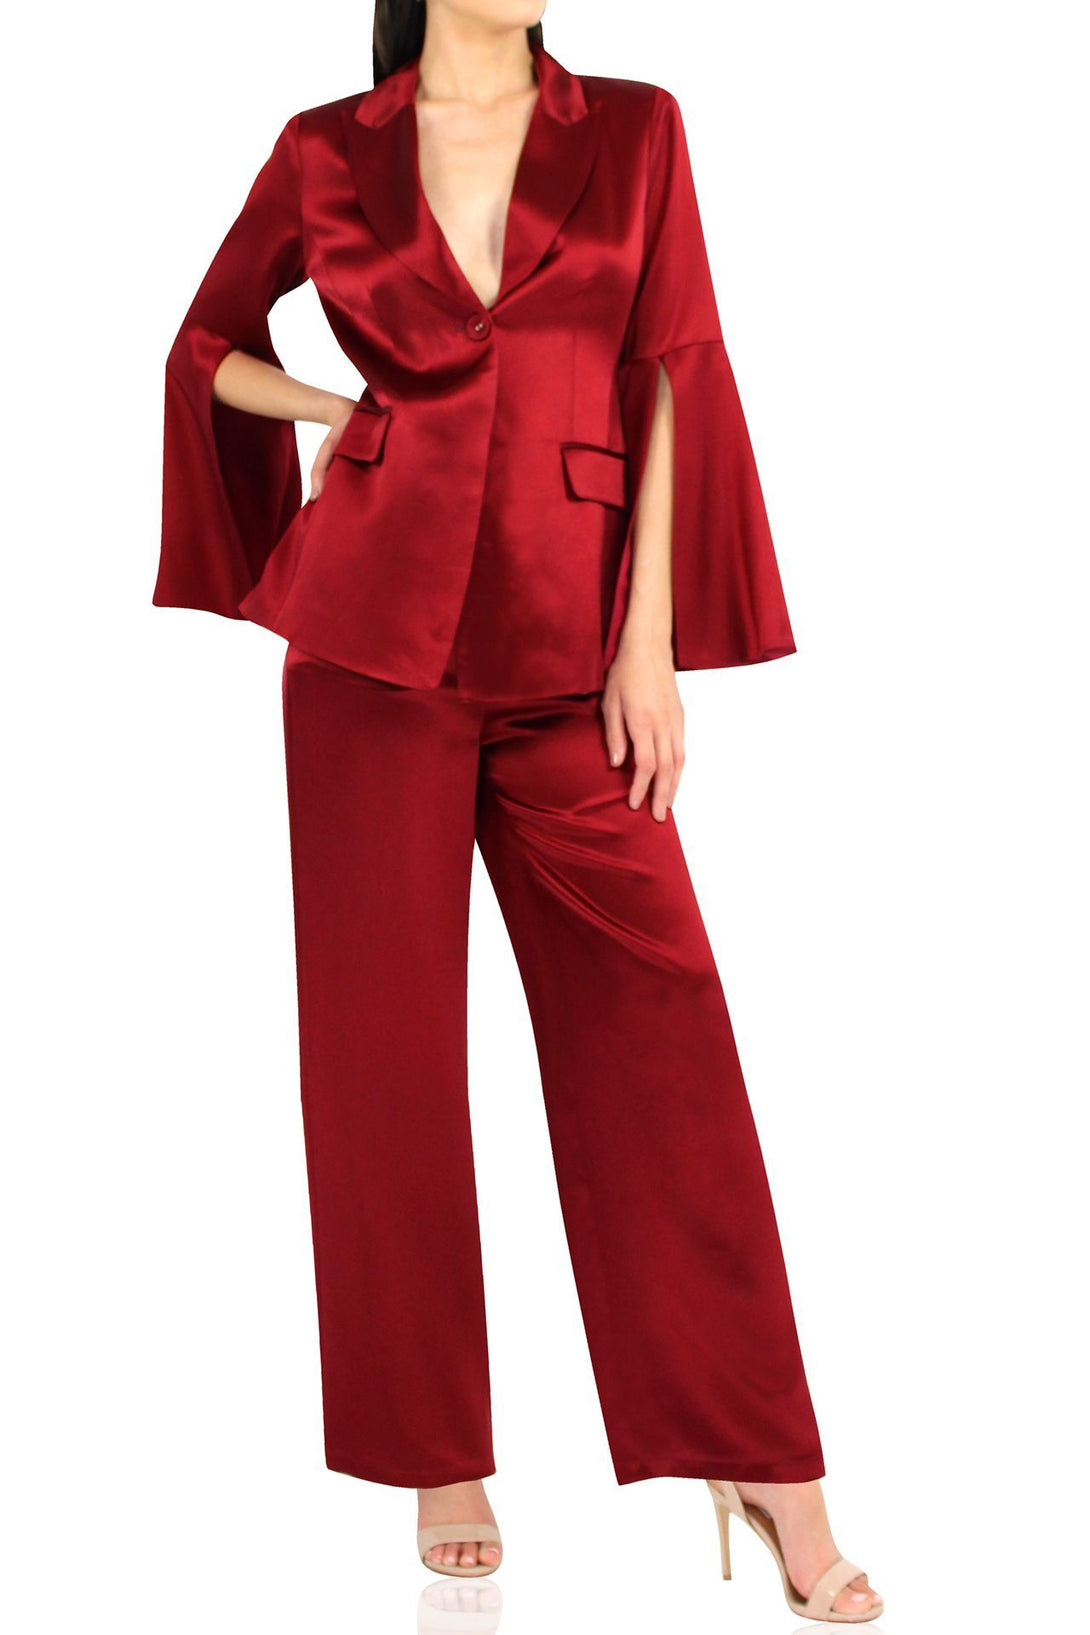 Silk-Designer-Matching-Red-Suit-By-Kyle-Richard